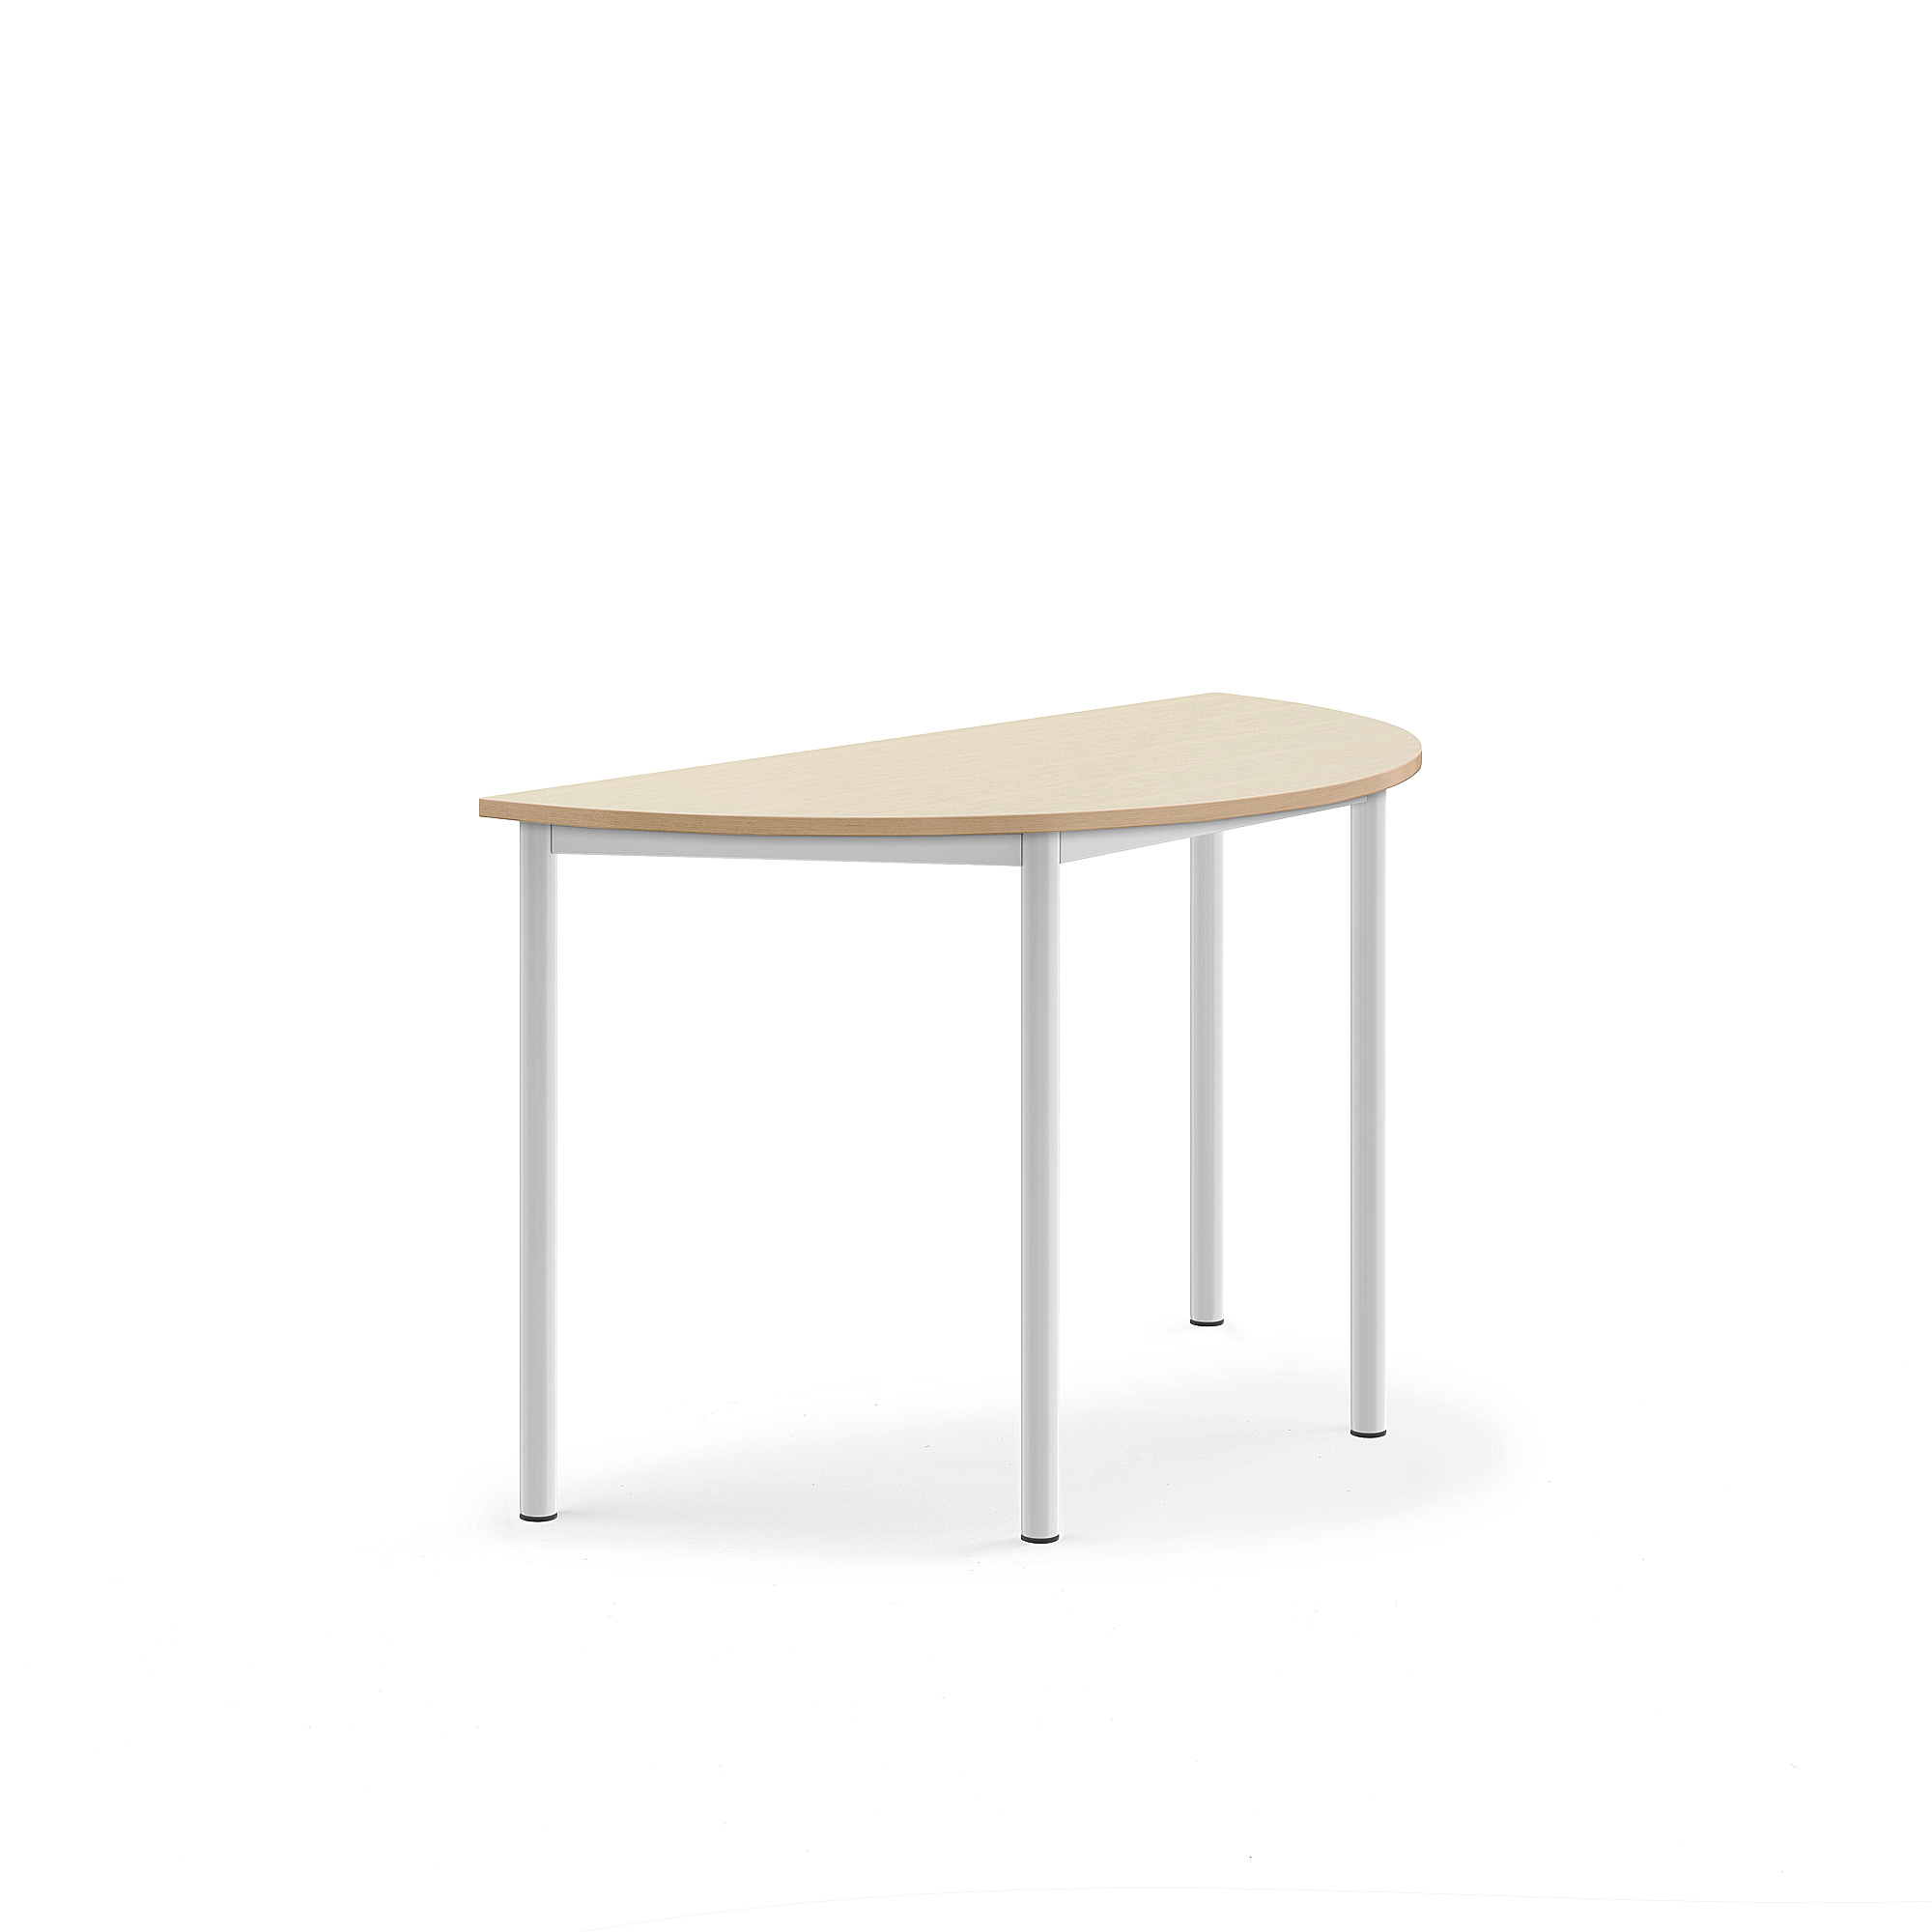 Stůl SONITUS, půlkruh, 1200x600x720 mm, bílé nohy, HPL deska tlumící hluk, bříza